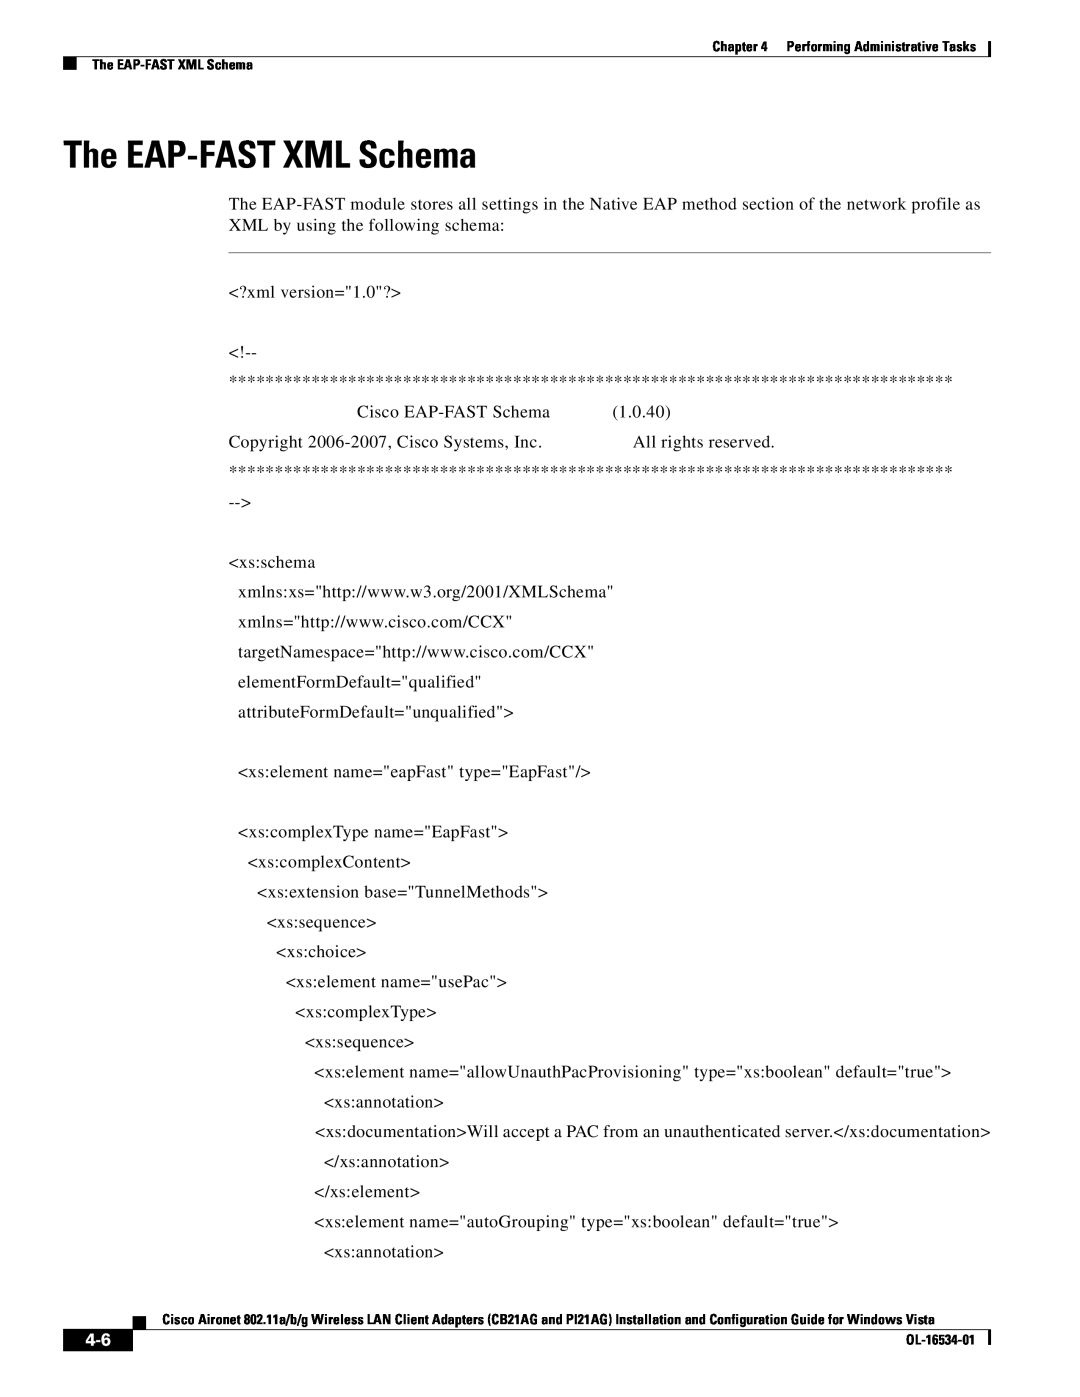 Cisco Systems PI21AG, CB21AG manual The EAP-FAST XML Schema 